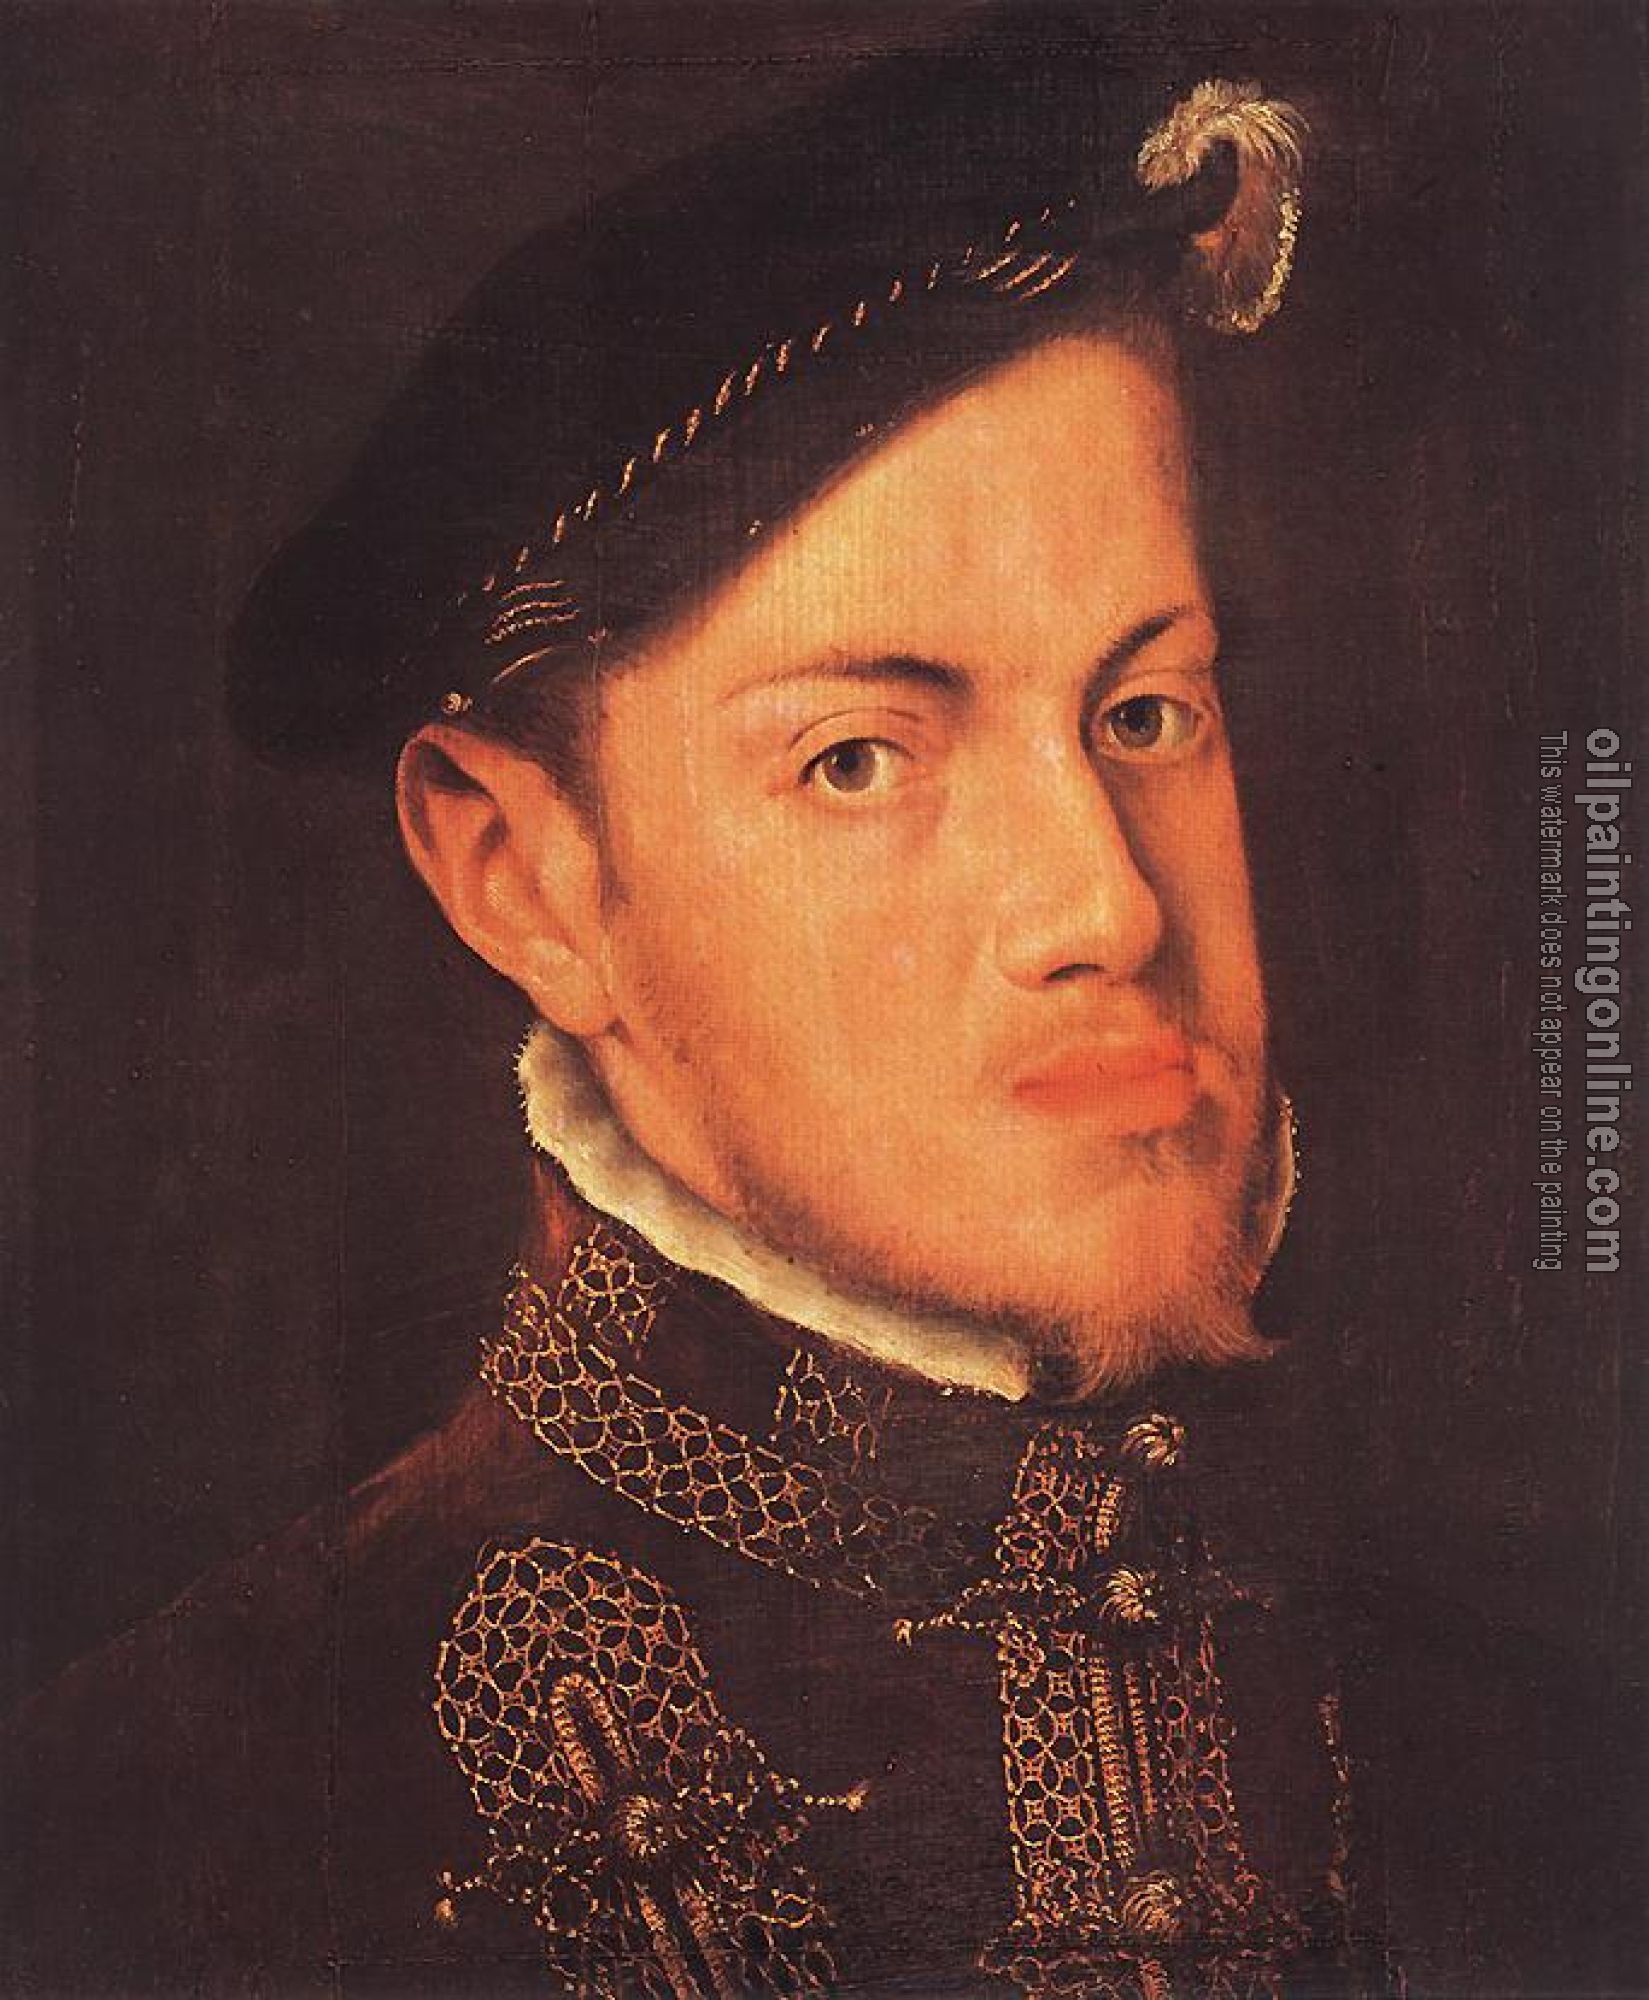 Mor Van Dashorst, Anthonis - Portrait of the Philip II, King of Spain